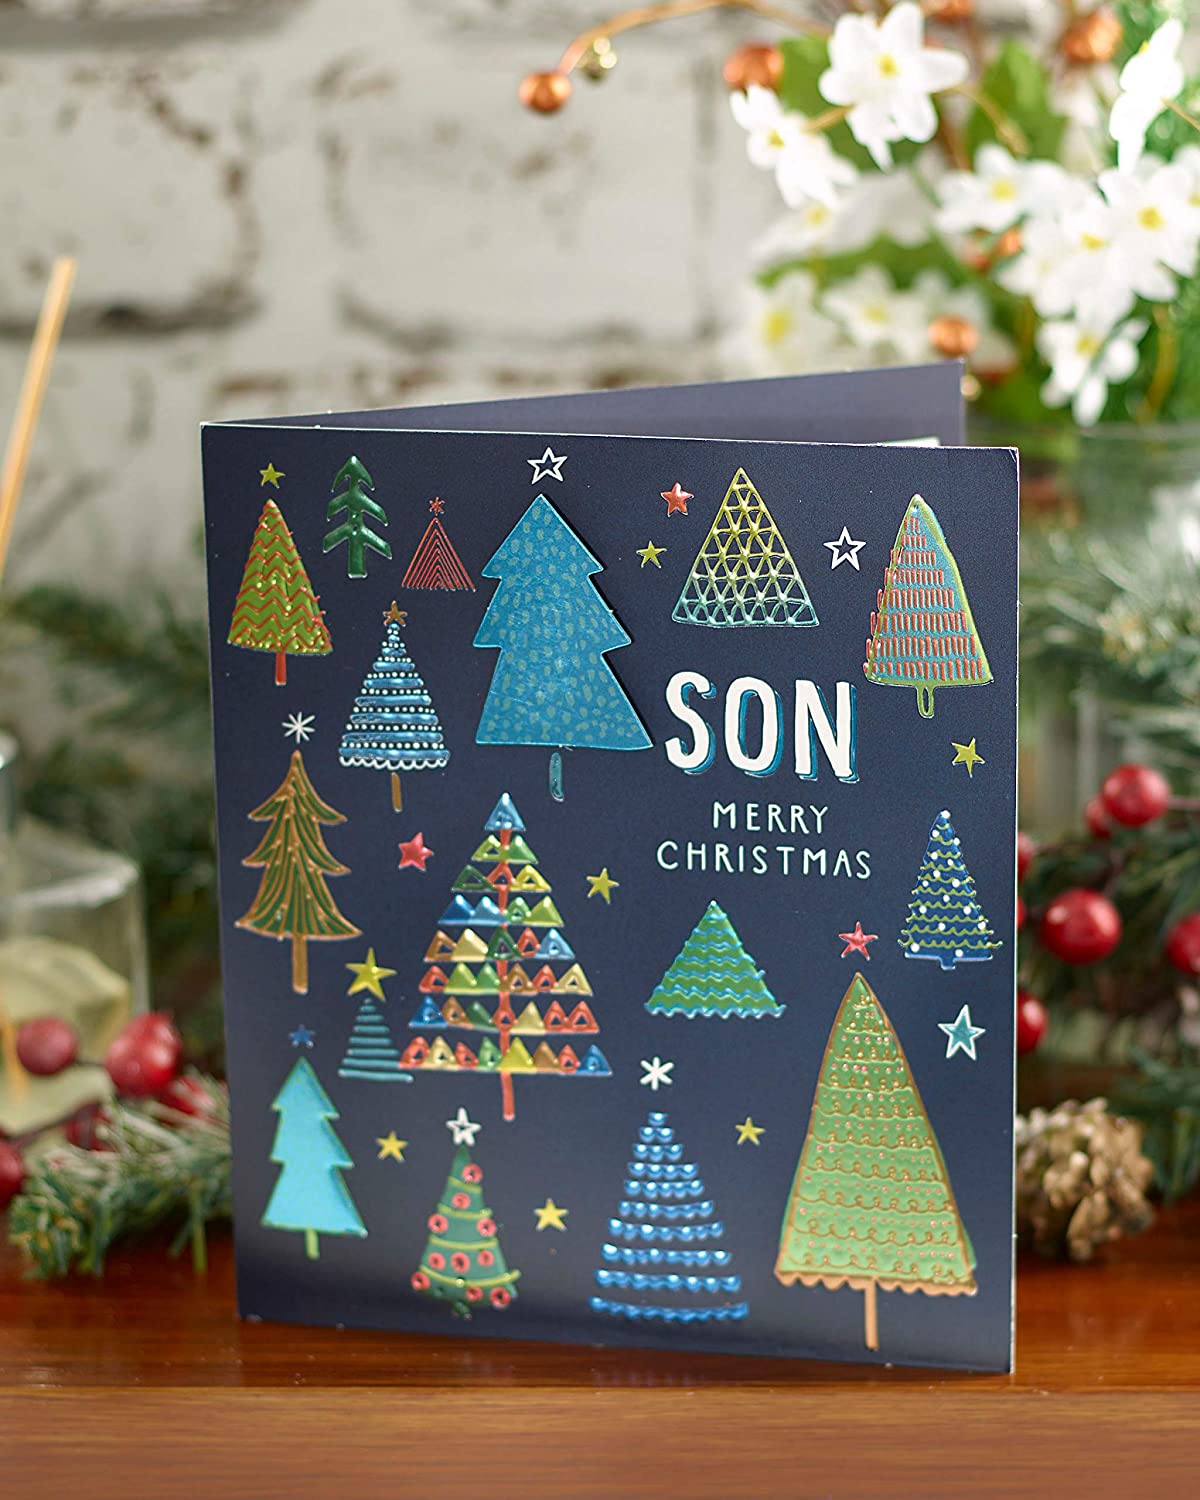 Son Christmas Card Festive Christmas Tree Design 